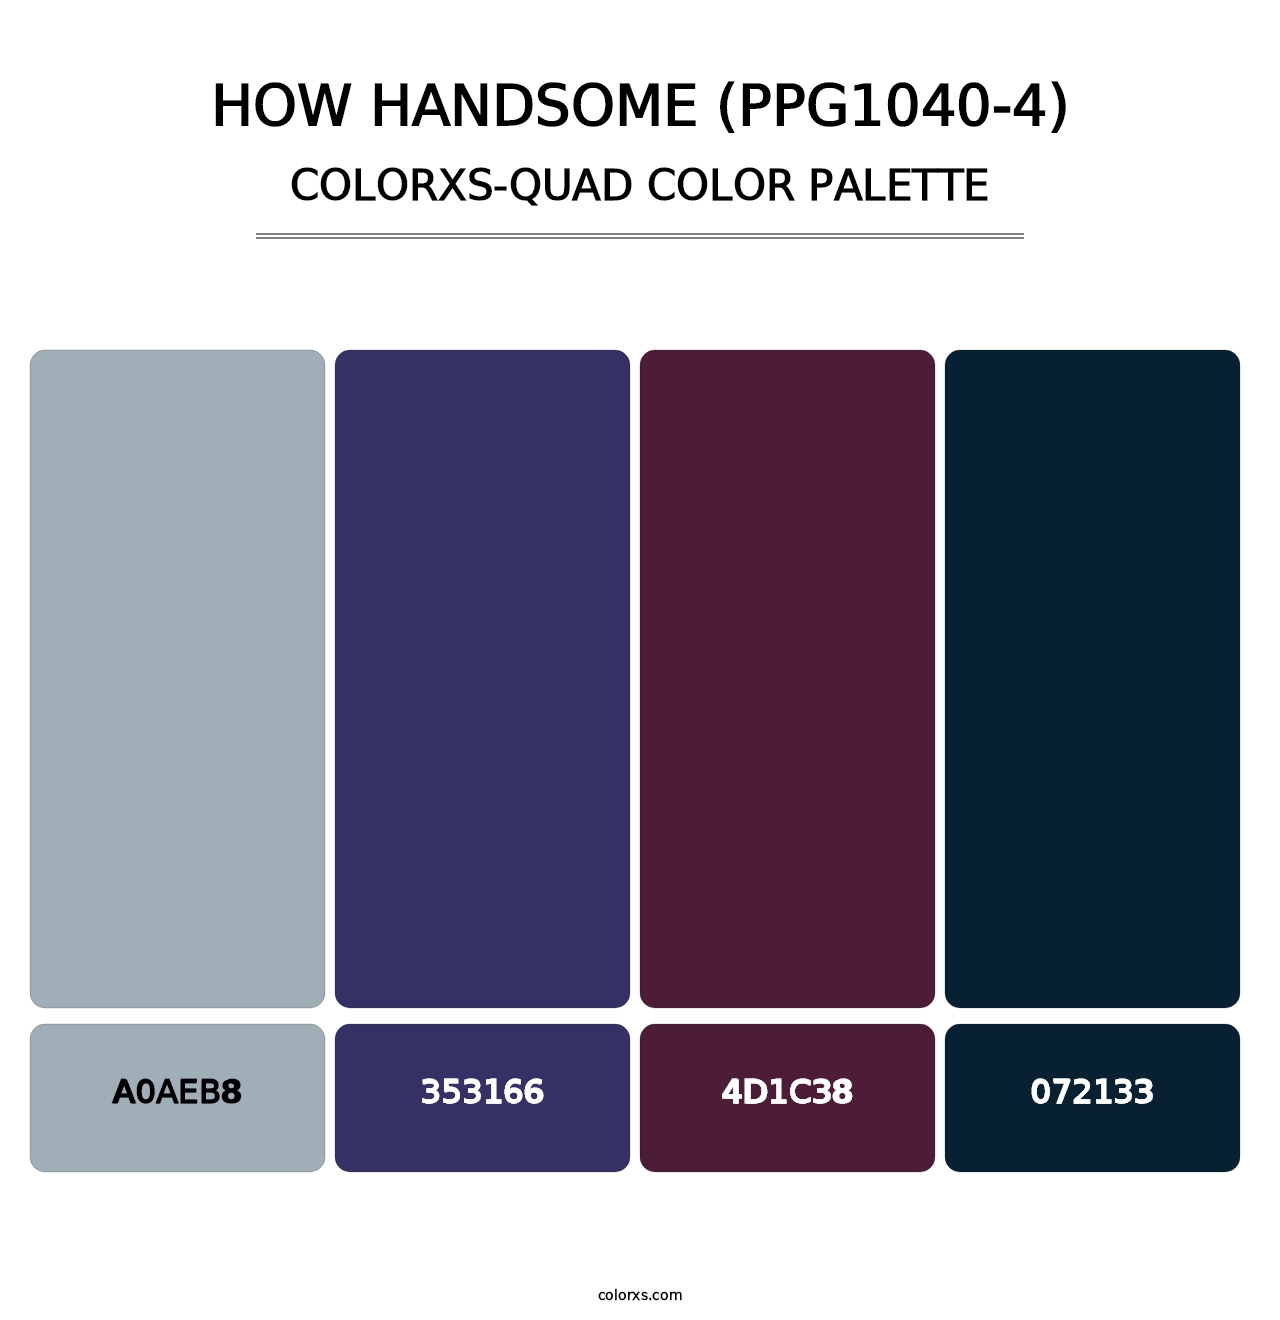 How Handsome (PPG1040-4) - Colorxs Quad Palette